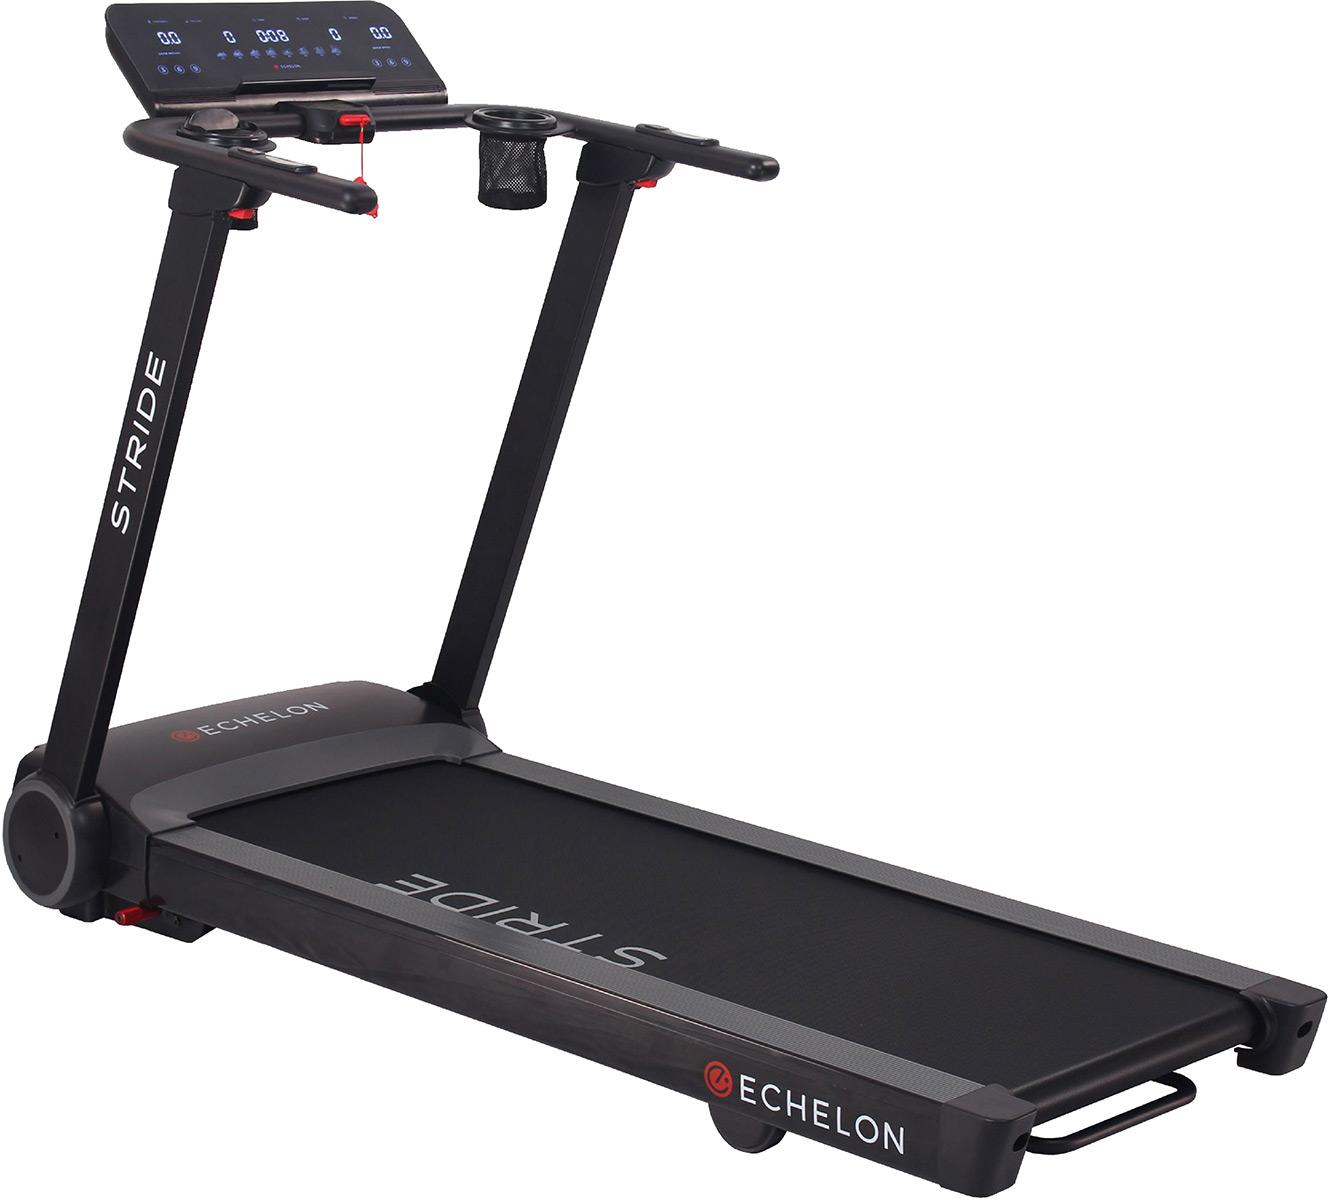 Echelon Stride Auto-fold Connected Treadmill - Black